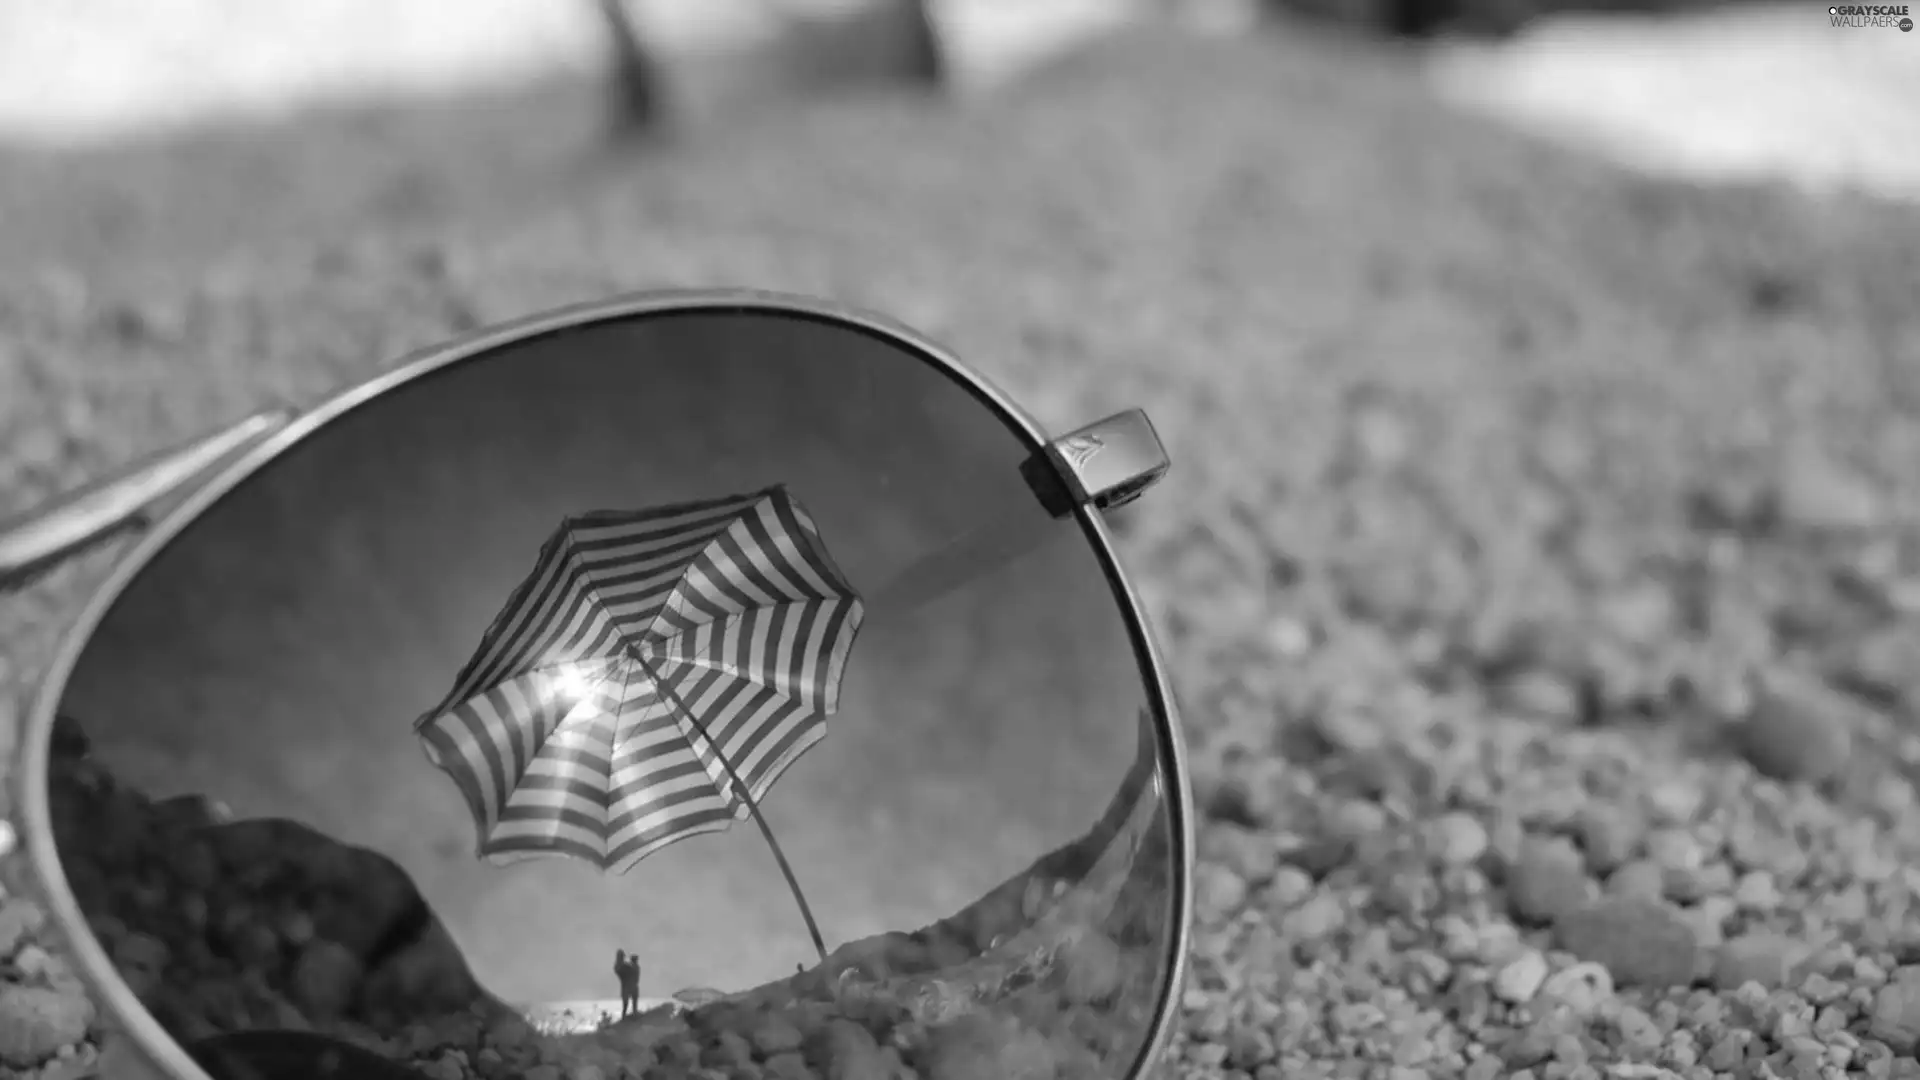 Glasses, Umbrella, reflection